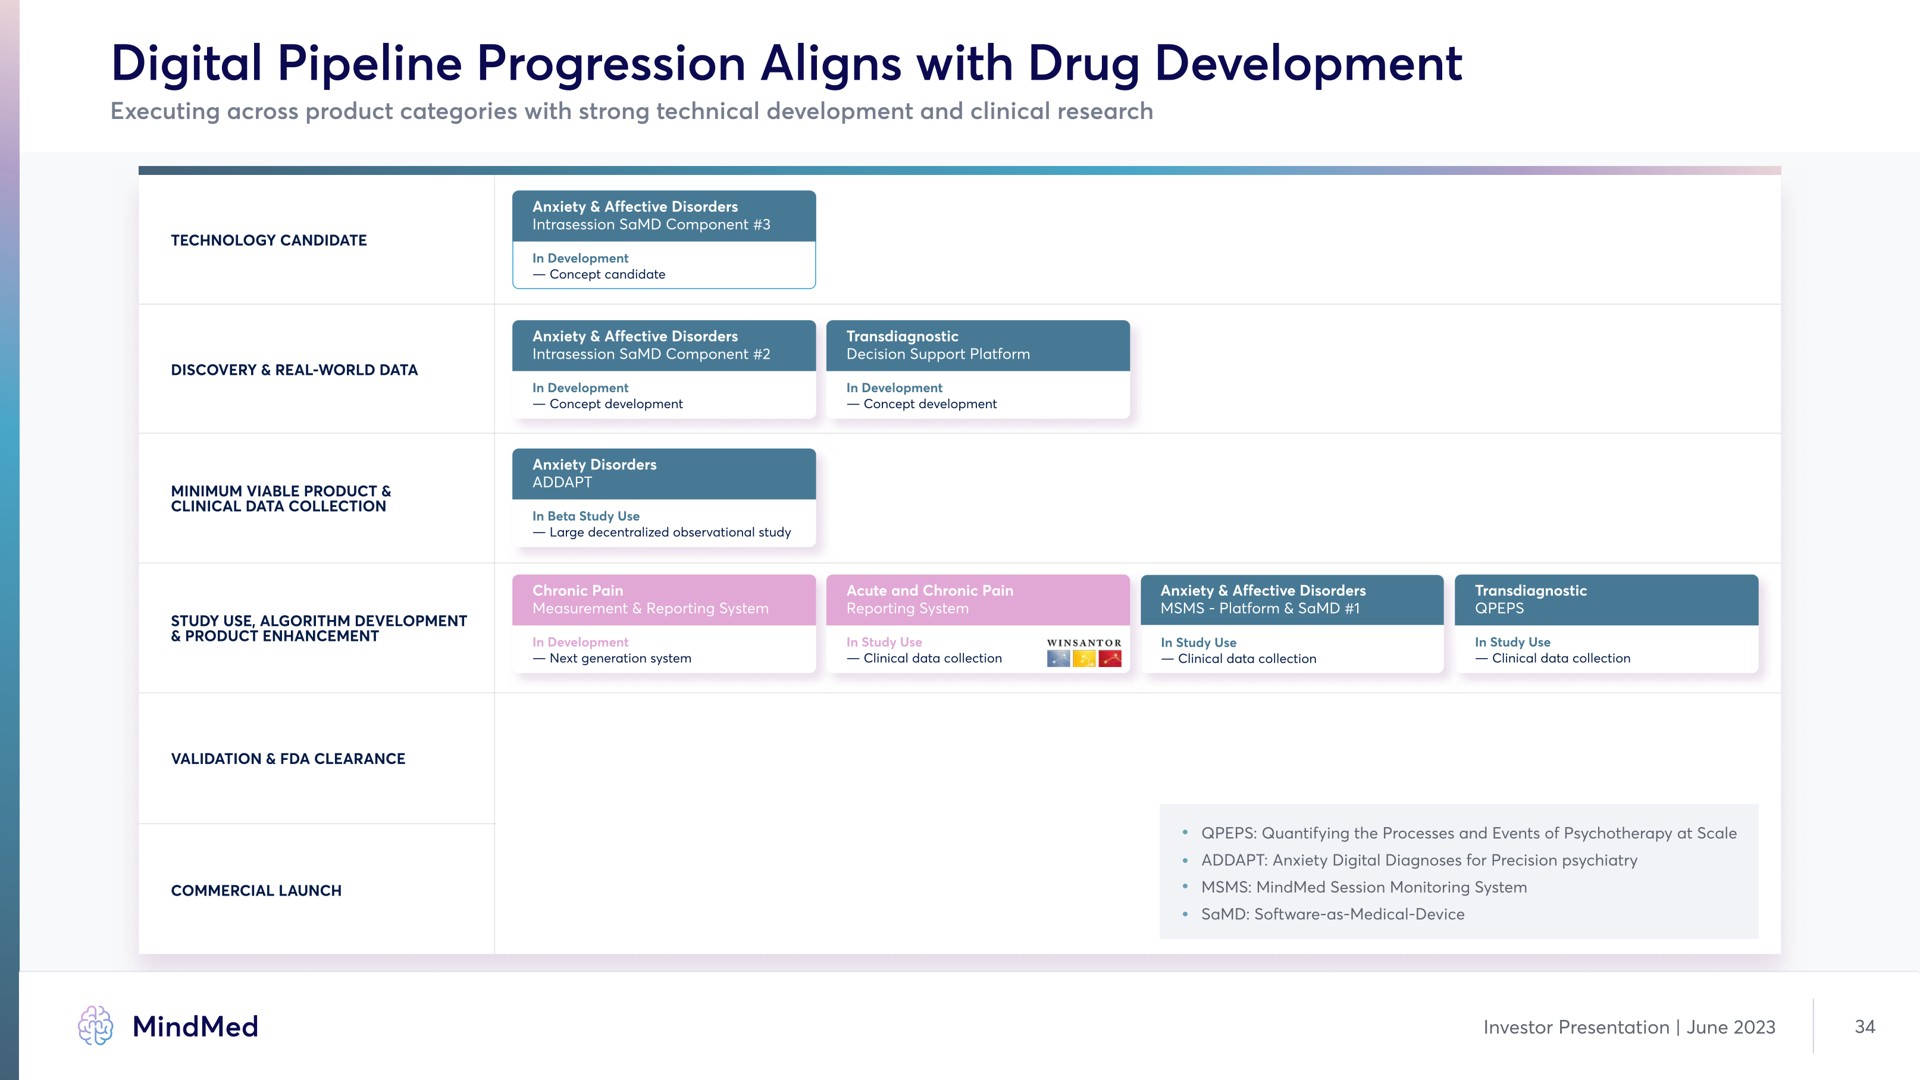 digital pipeline progression aligns with drug development | MindMed